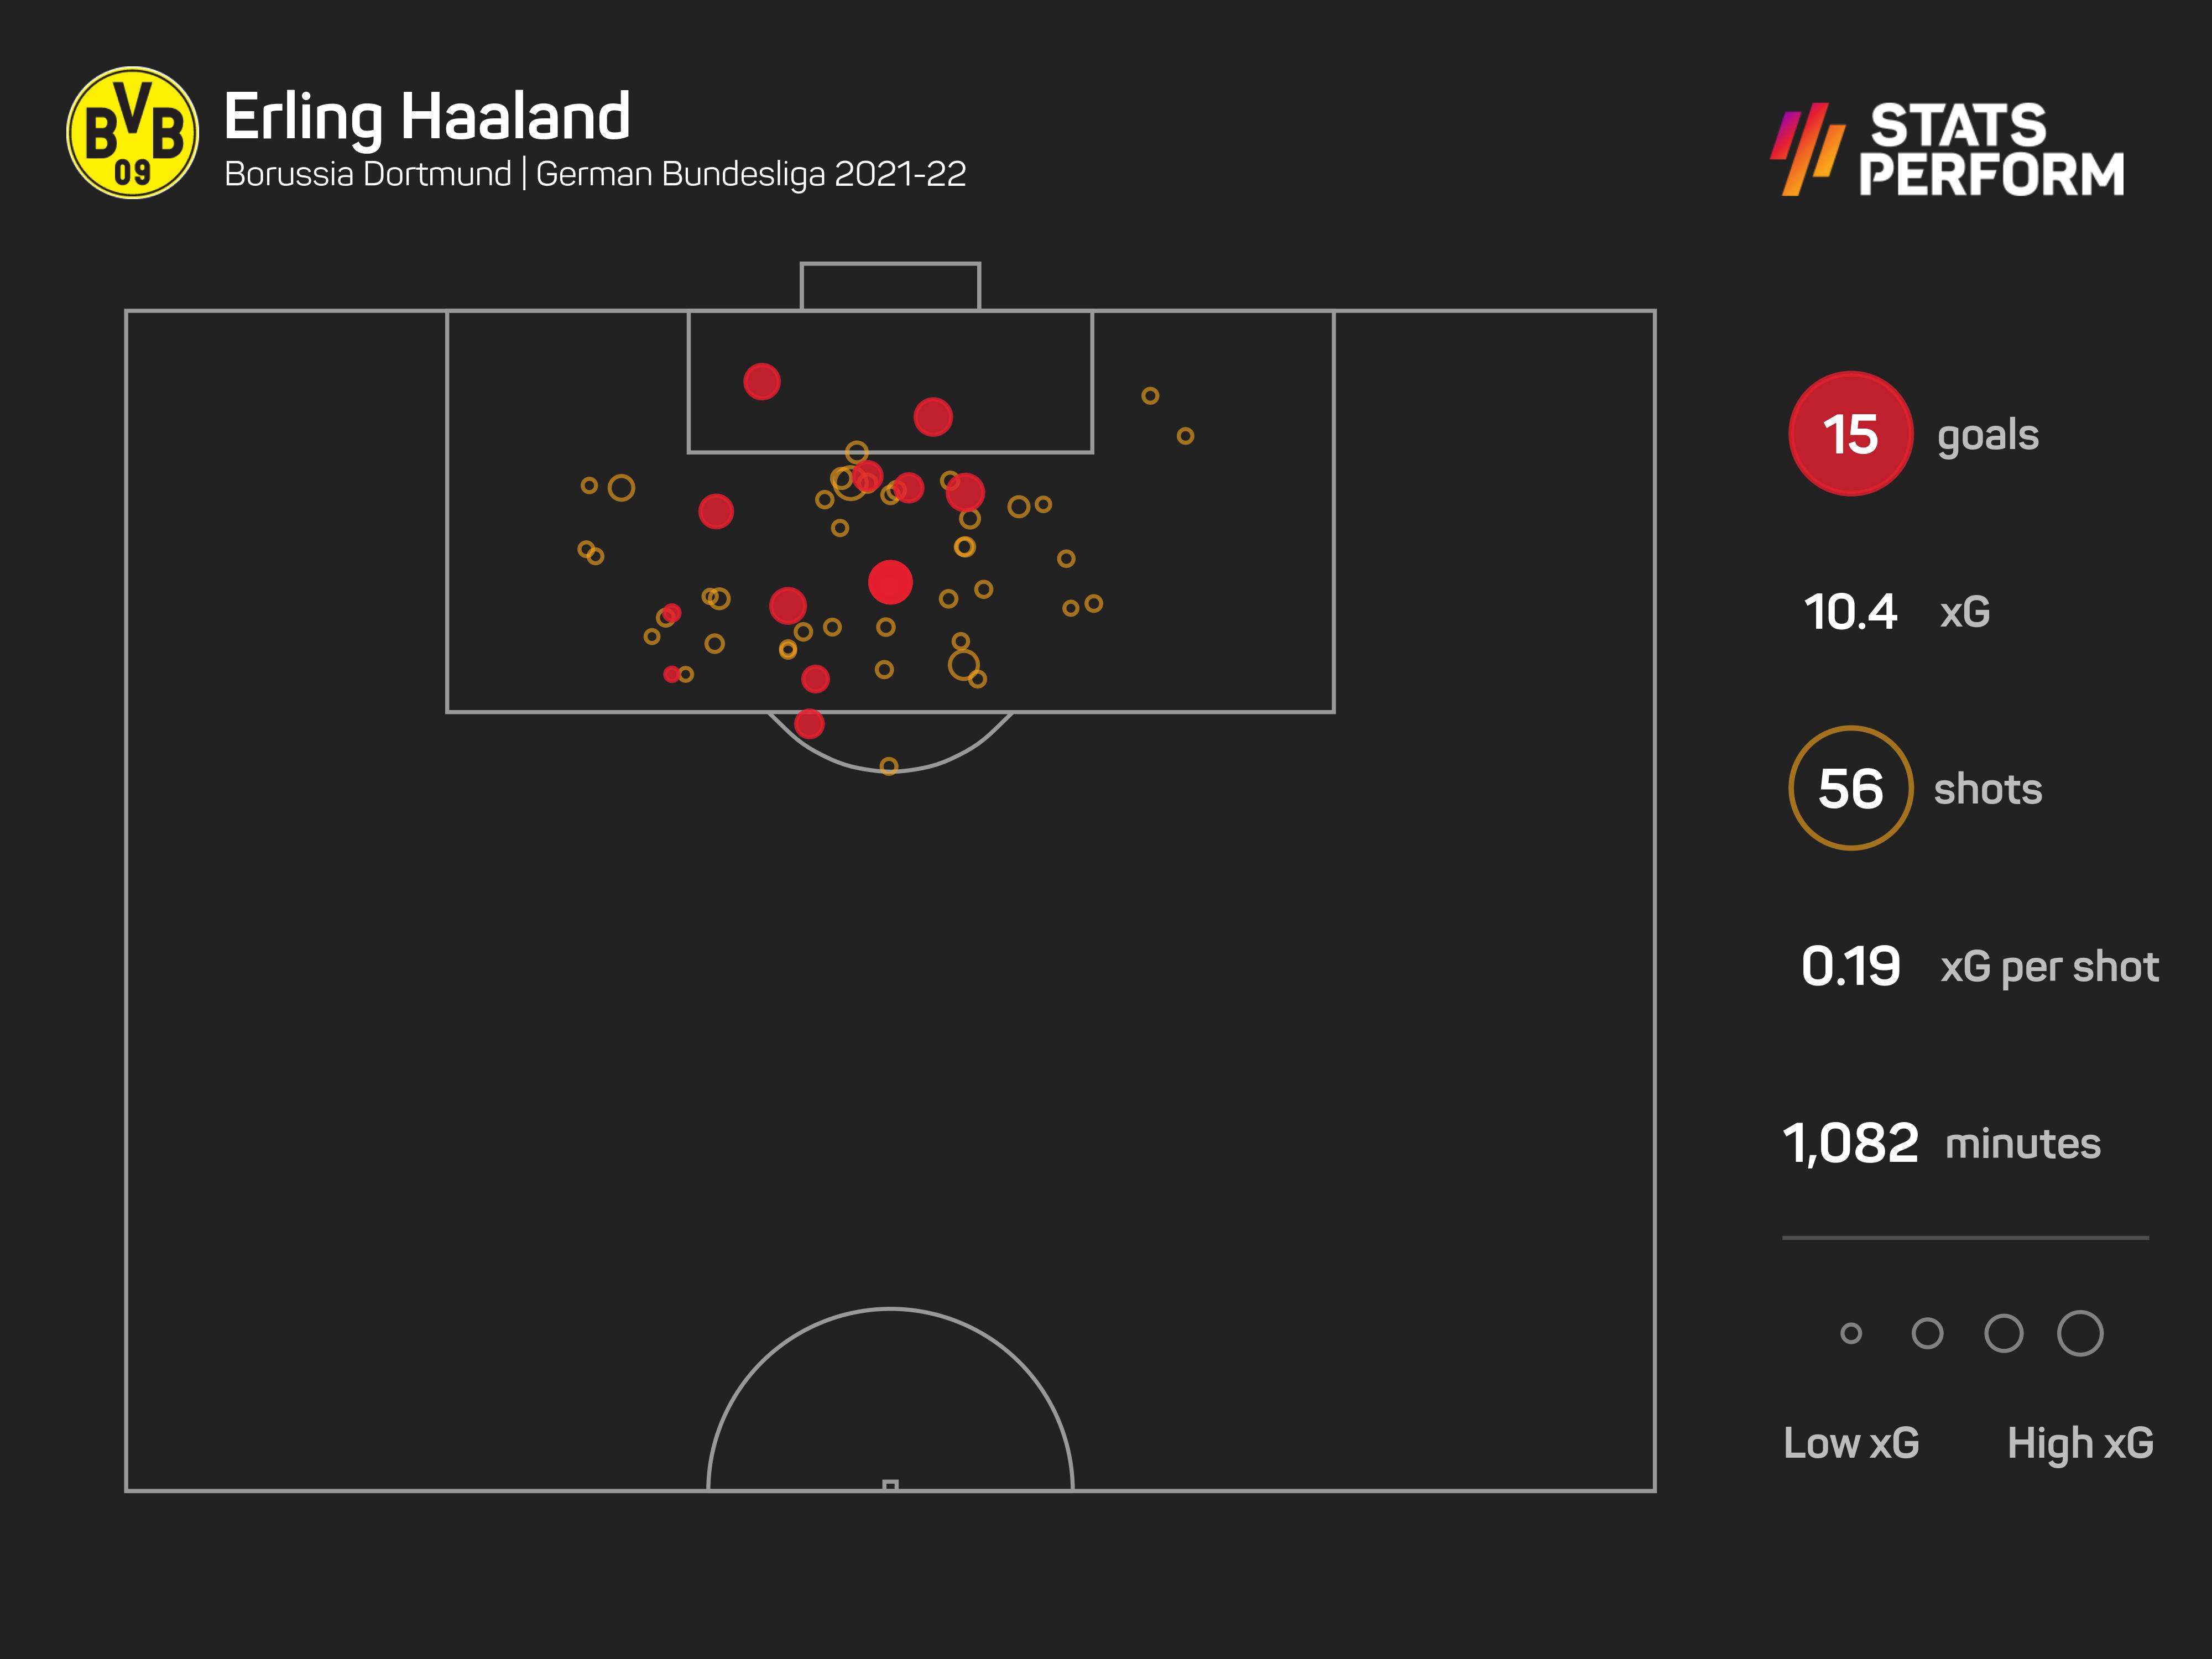 Erling Haaland has already hit 15 league goals this season